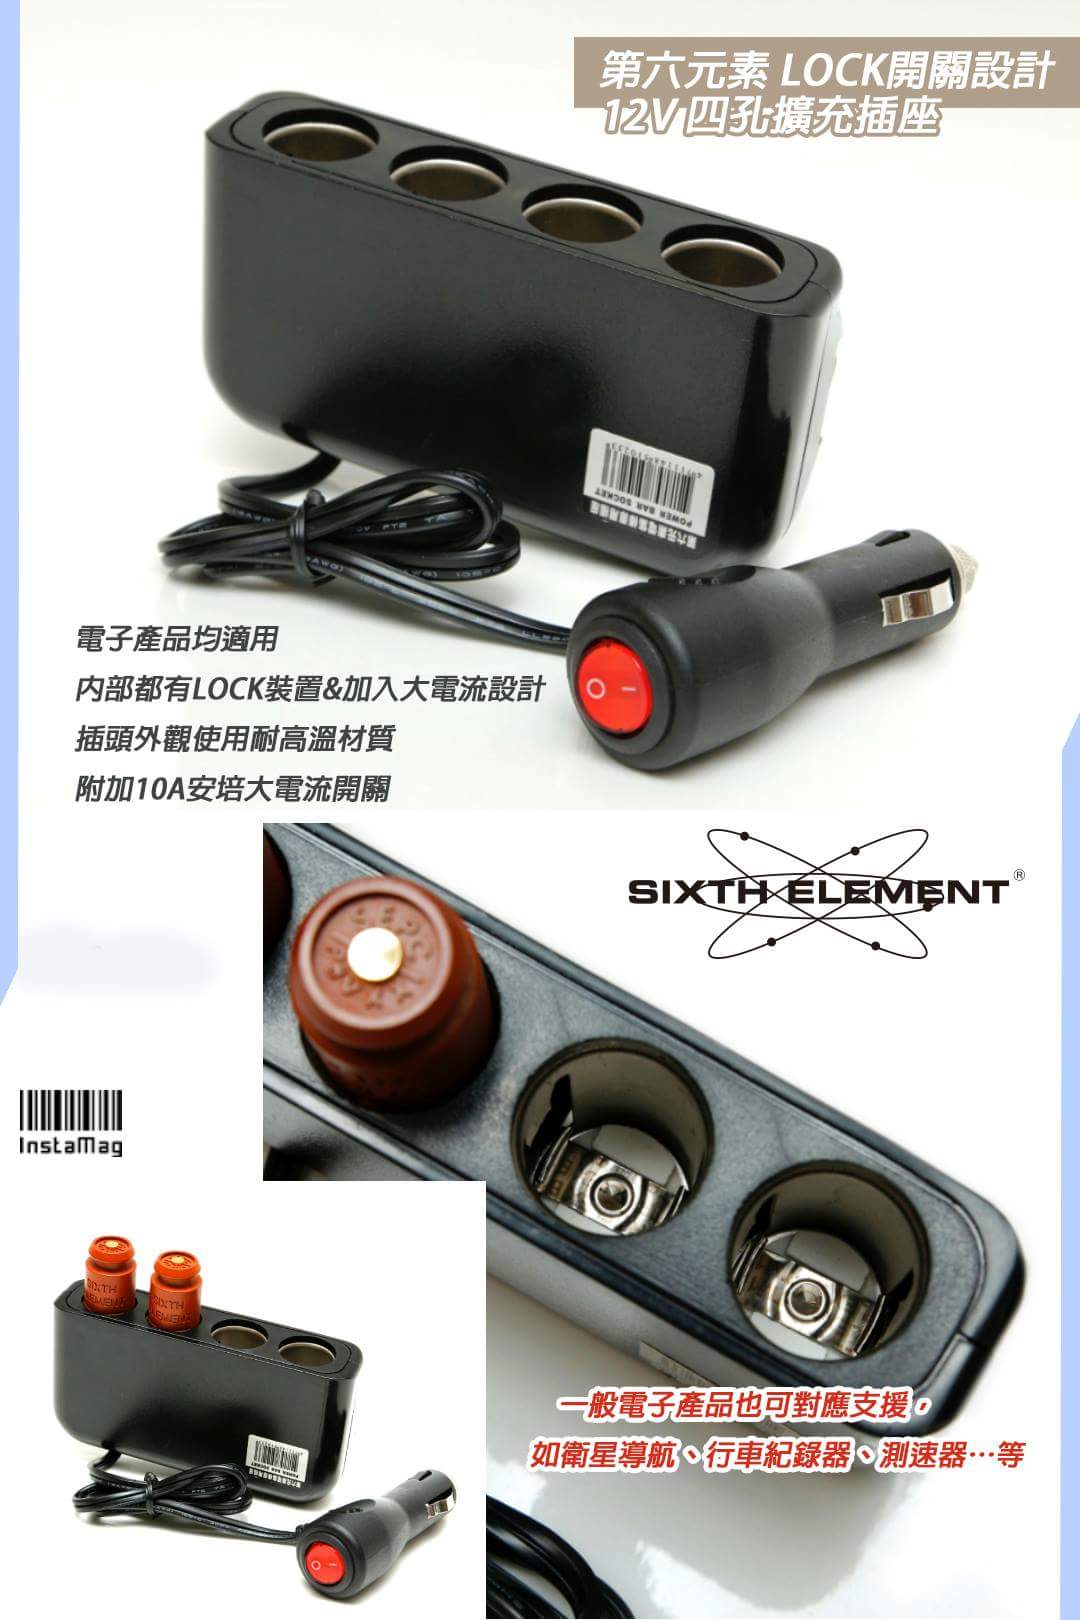 Sixth Element Power Bar PB-4 DC Socket - install at Cigarette Lighter Compartment